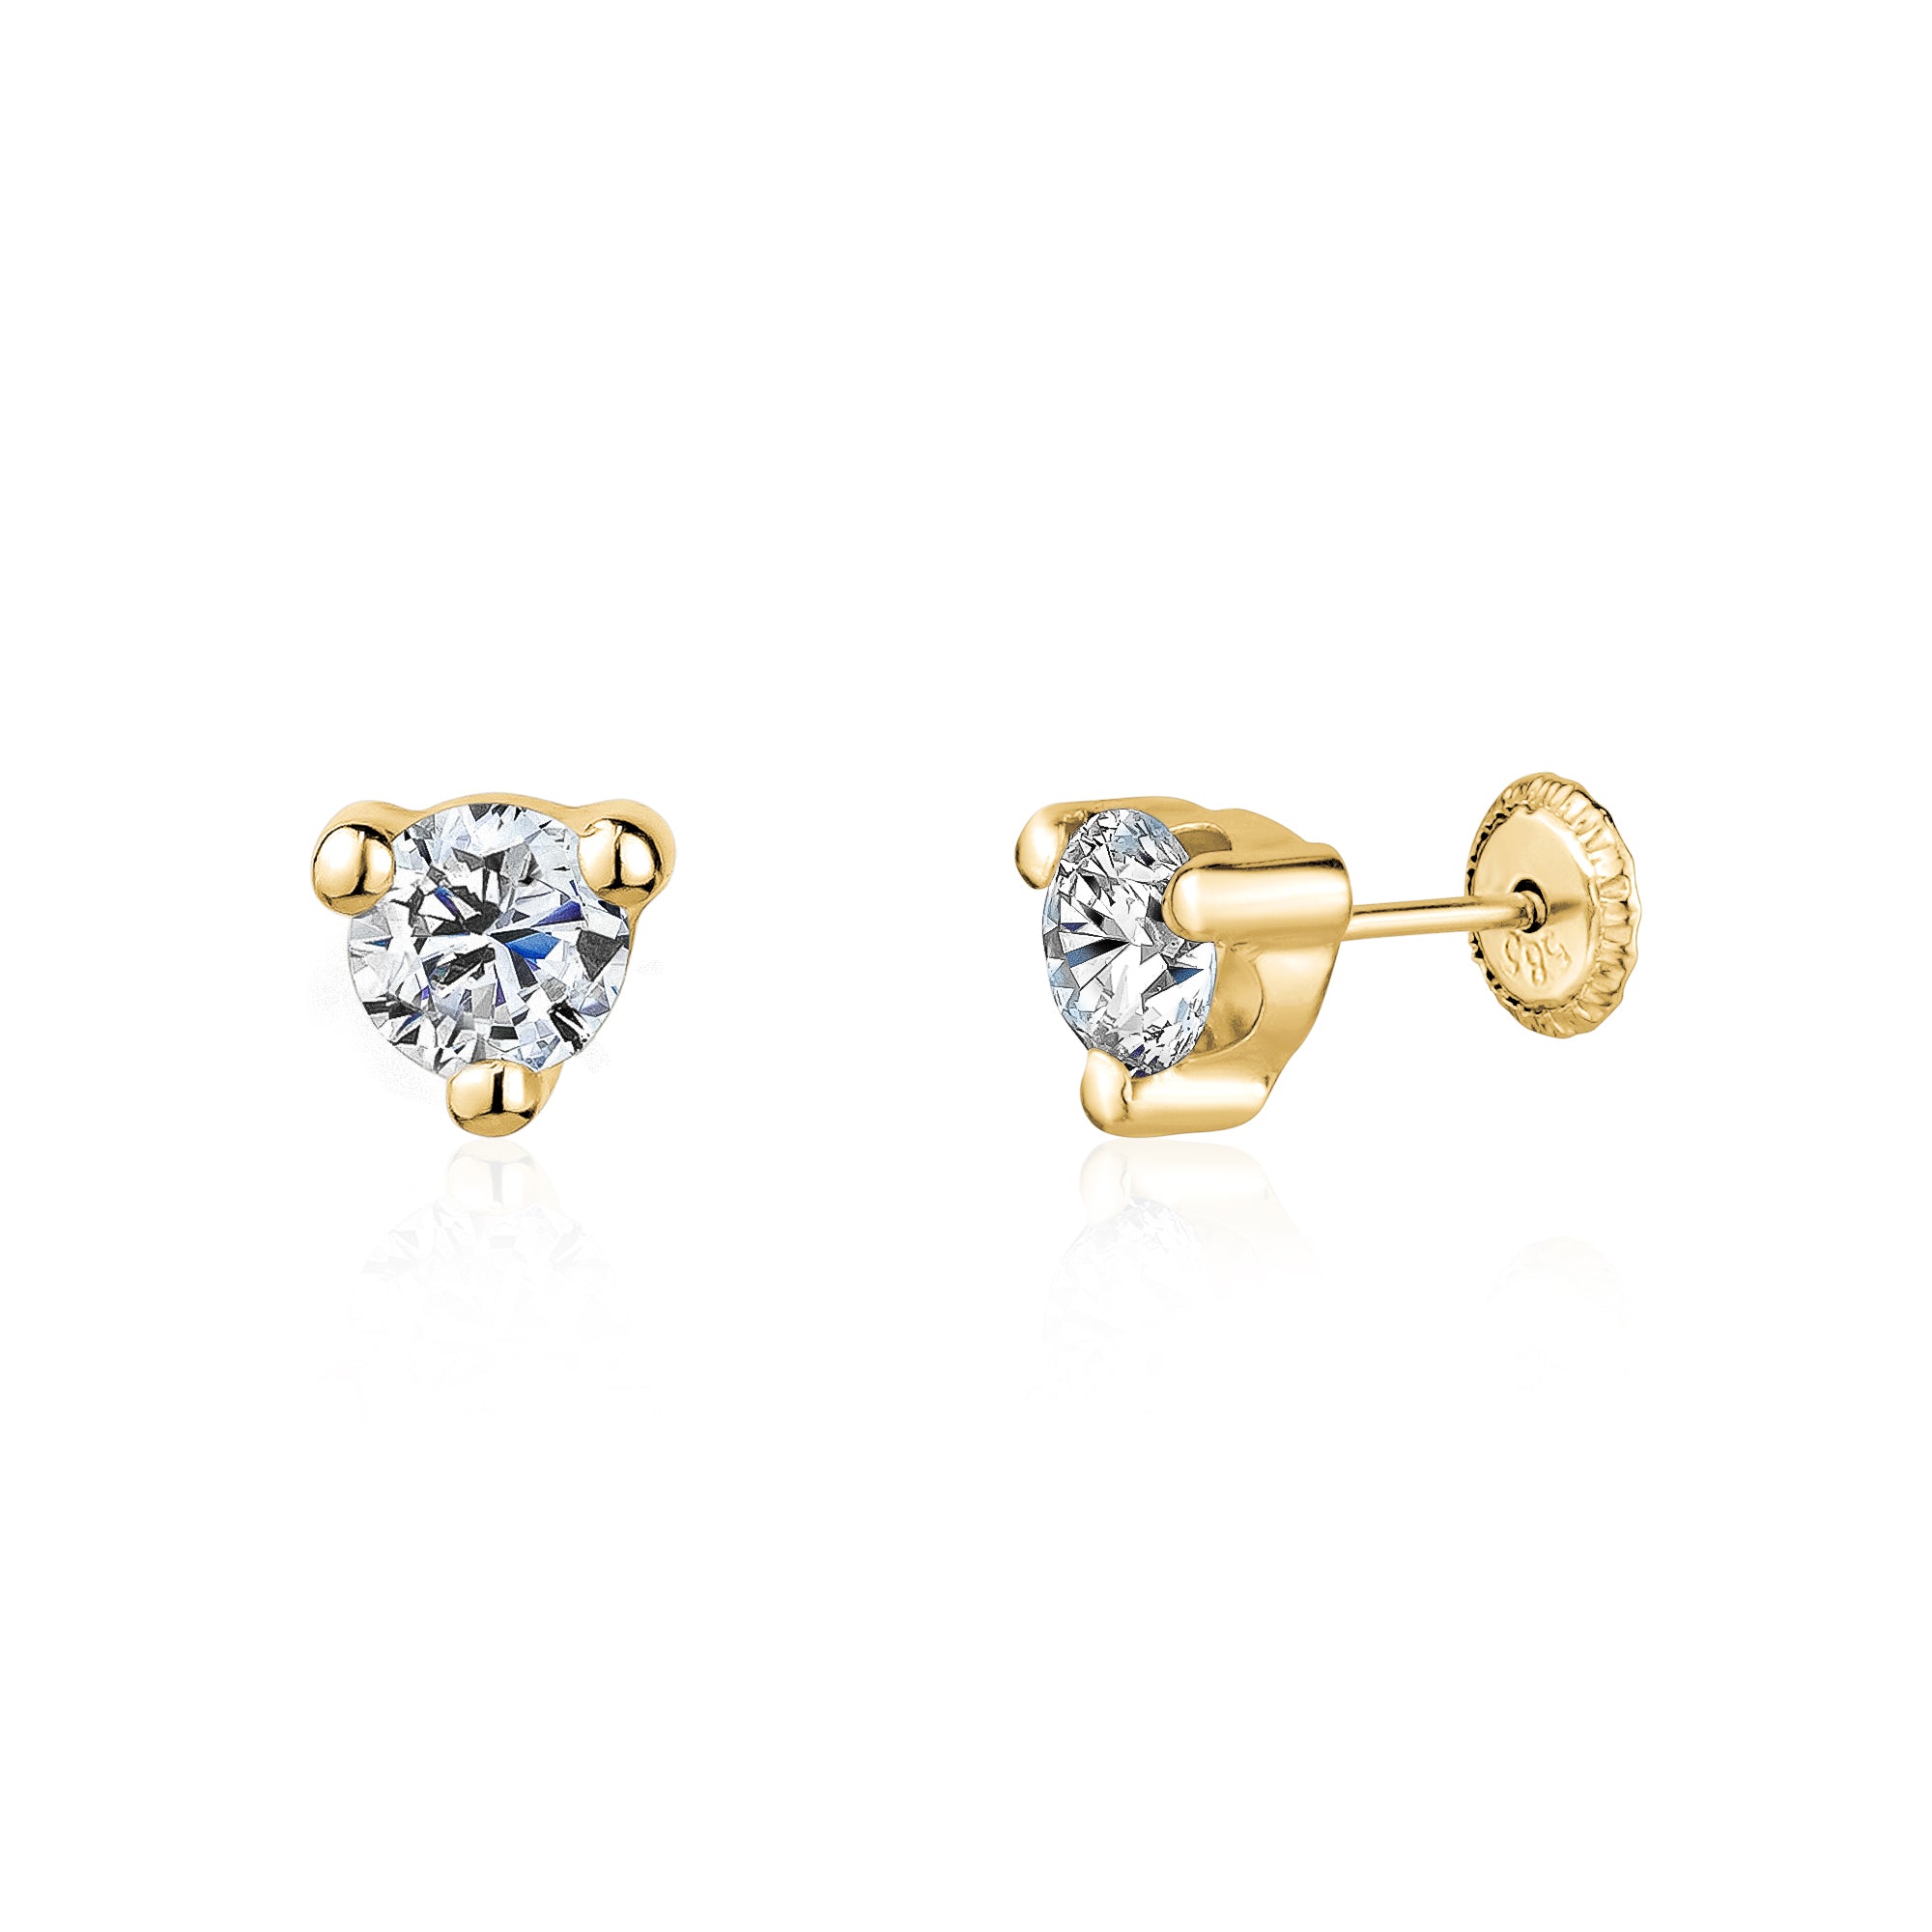 14k Gold Simulated Diamond Stud Earrings Screwback Babies Second Piercing Tiny